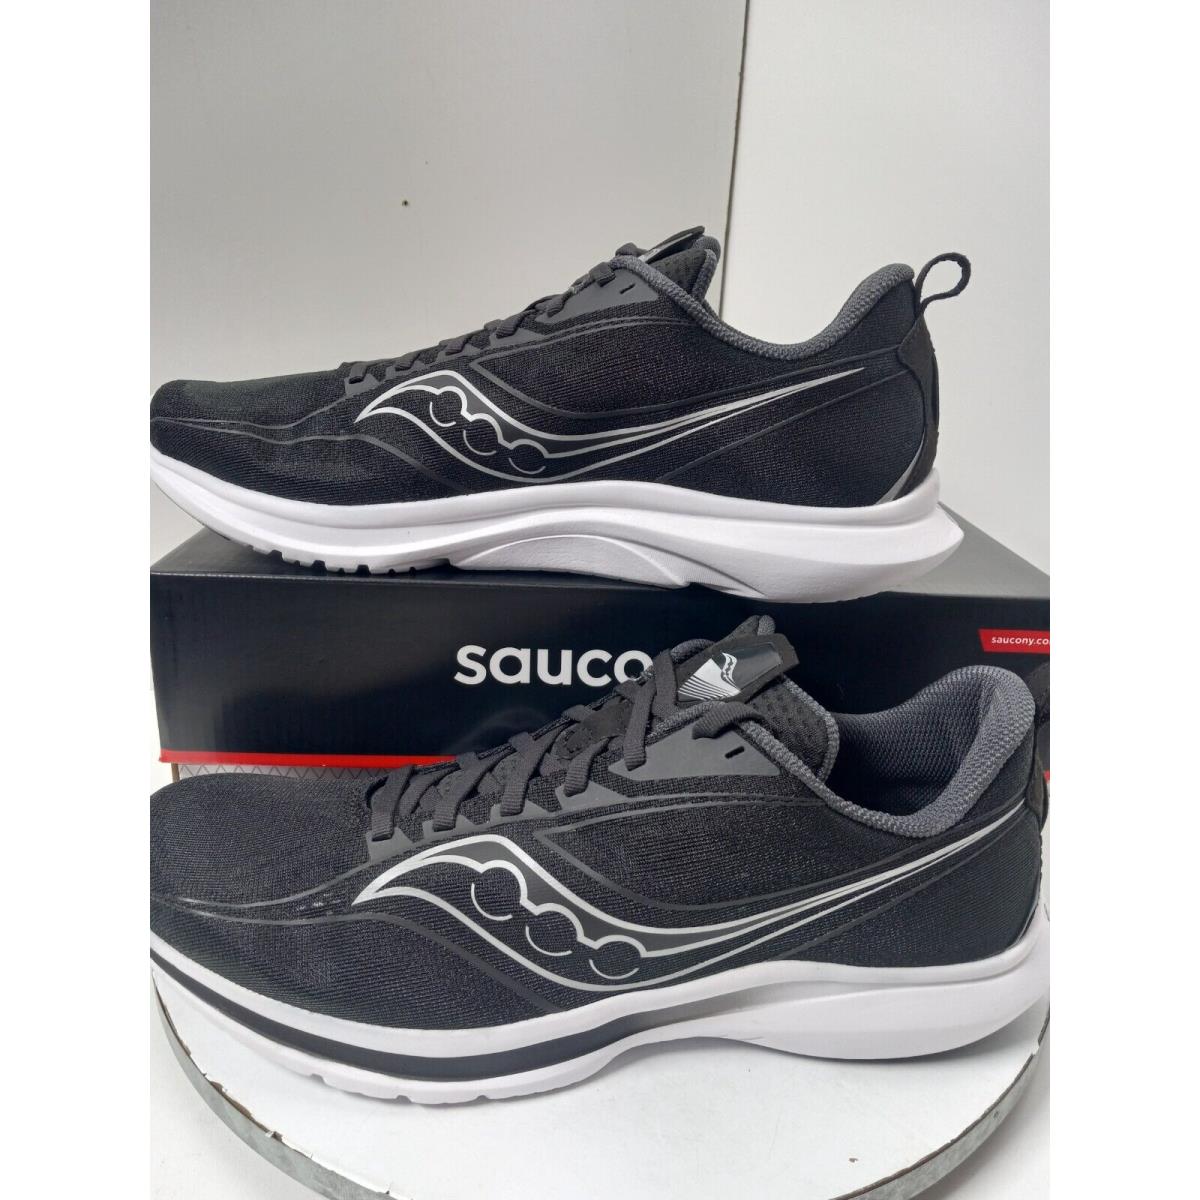 Saucony Kinvara 13 Running Shoes Black Silver Sneakers Mens Sz 11.5